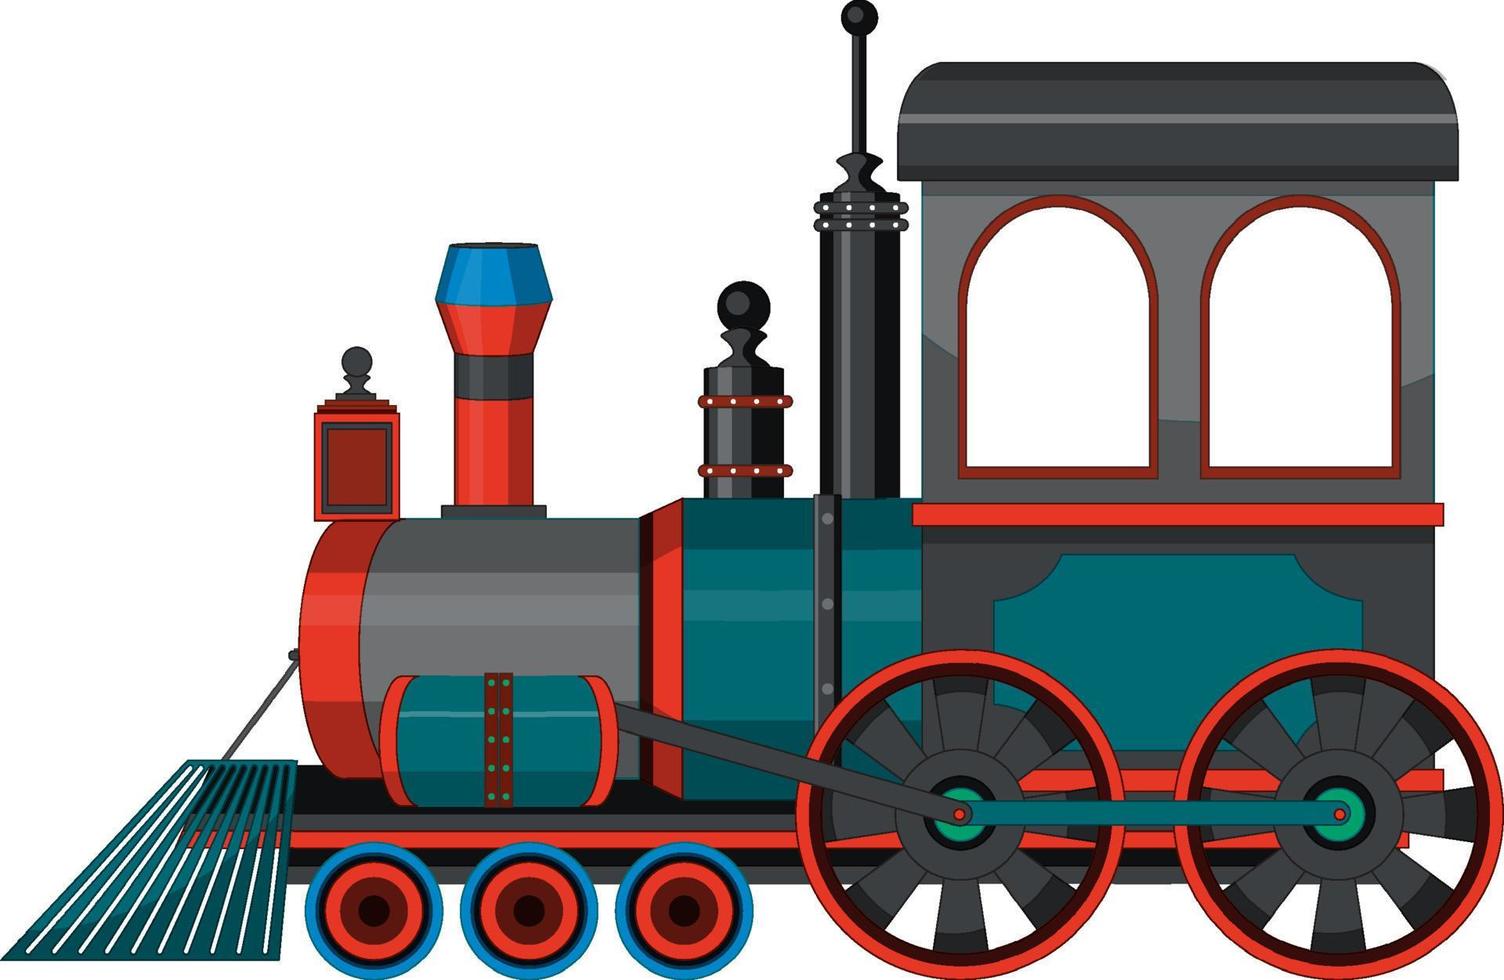 Steam locomotive train vintage style vector